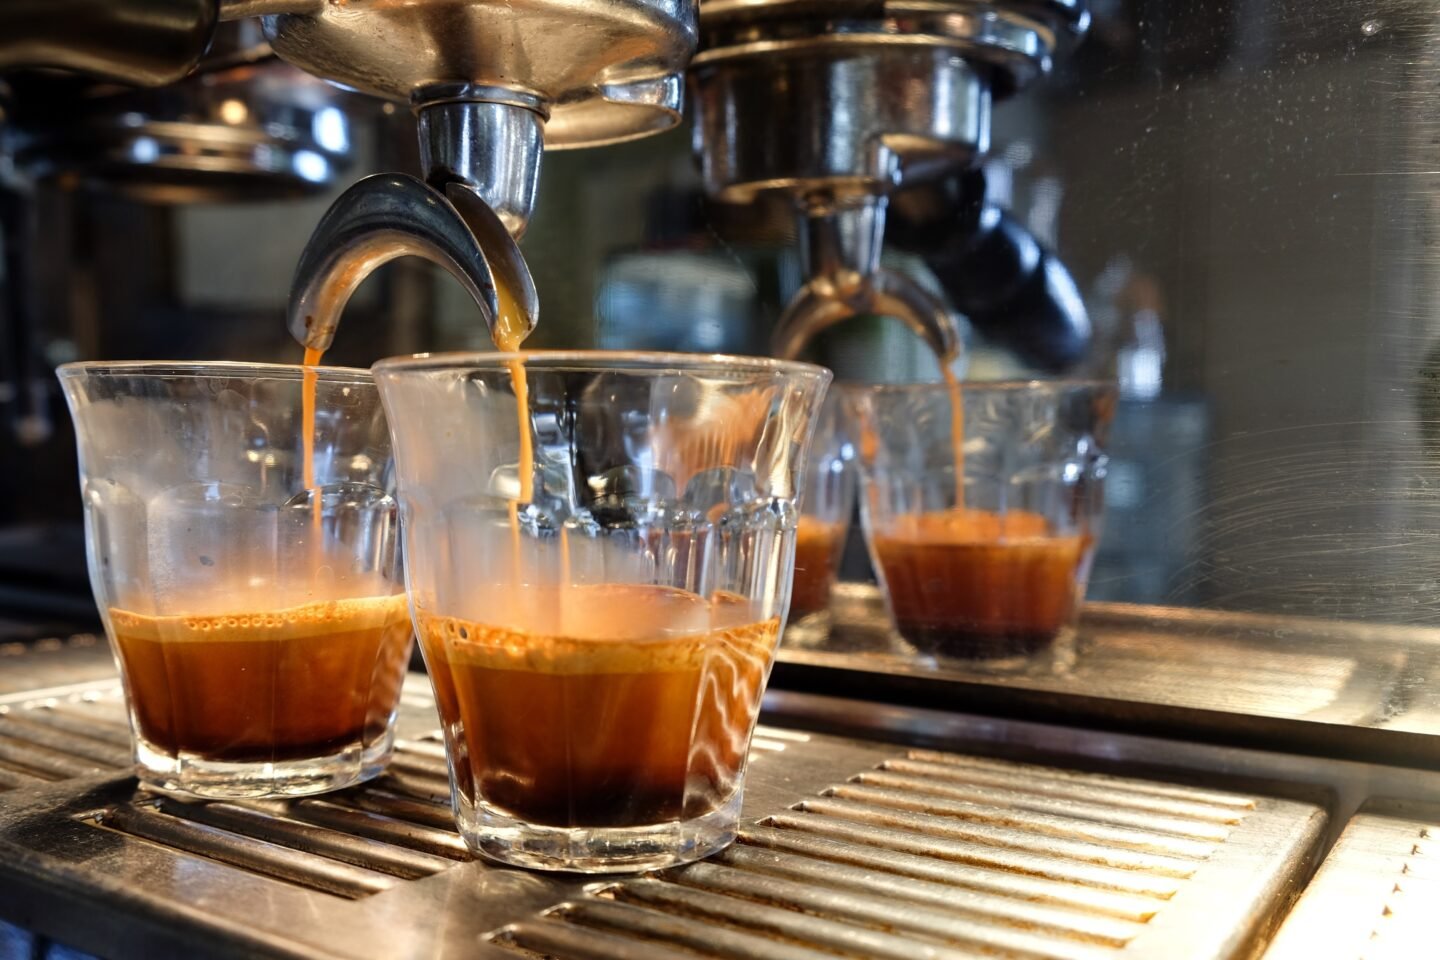 machine-making-double-shots-of-espresso